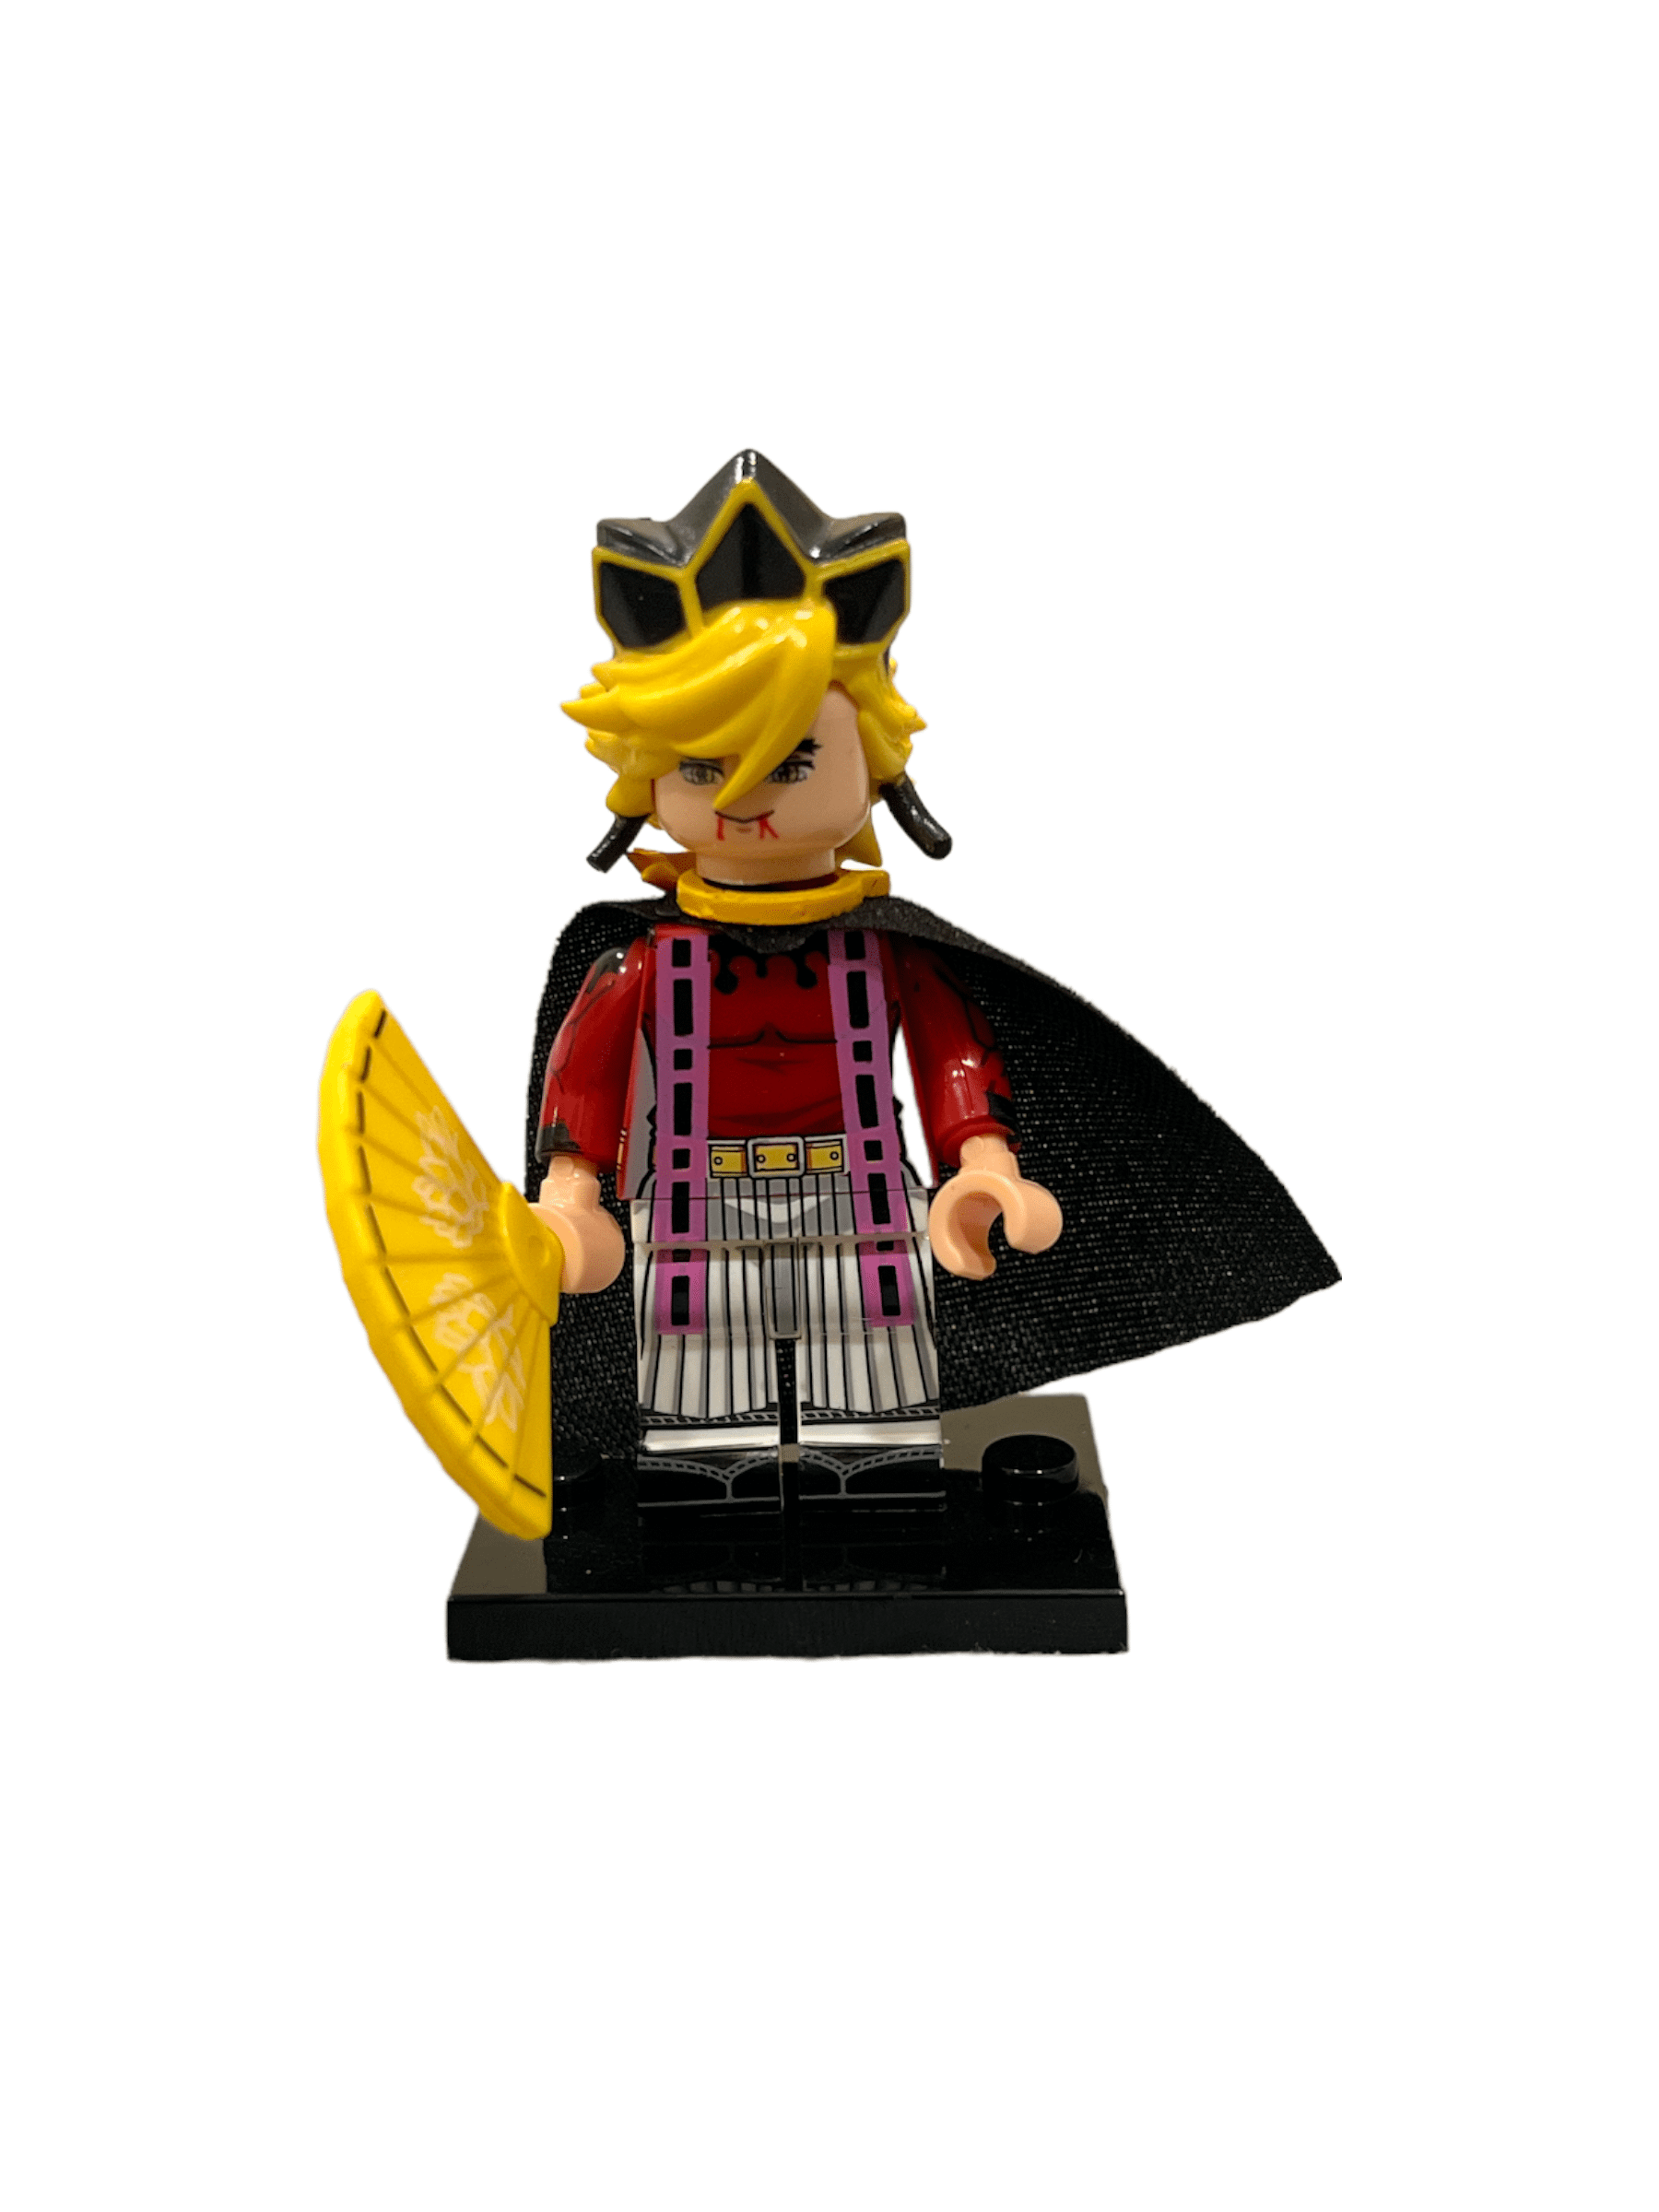 Shop Demon Slayer Lego Mini Figure online